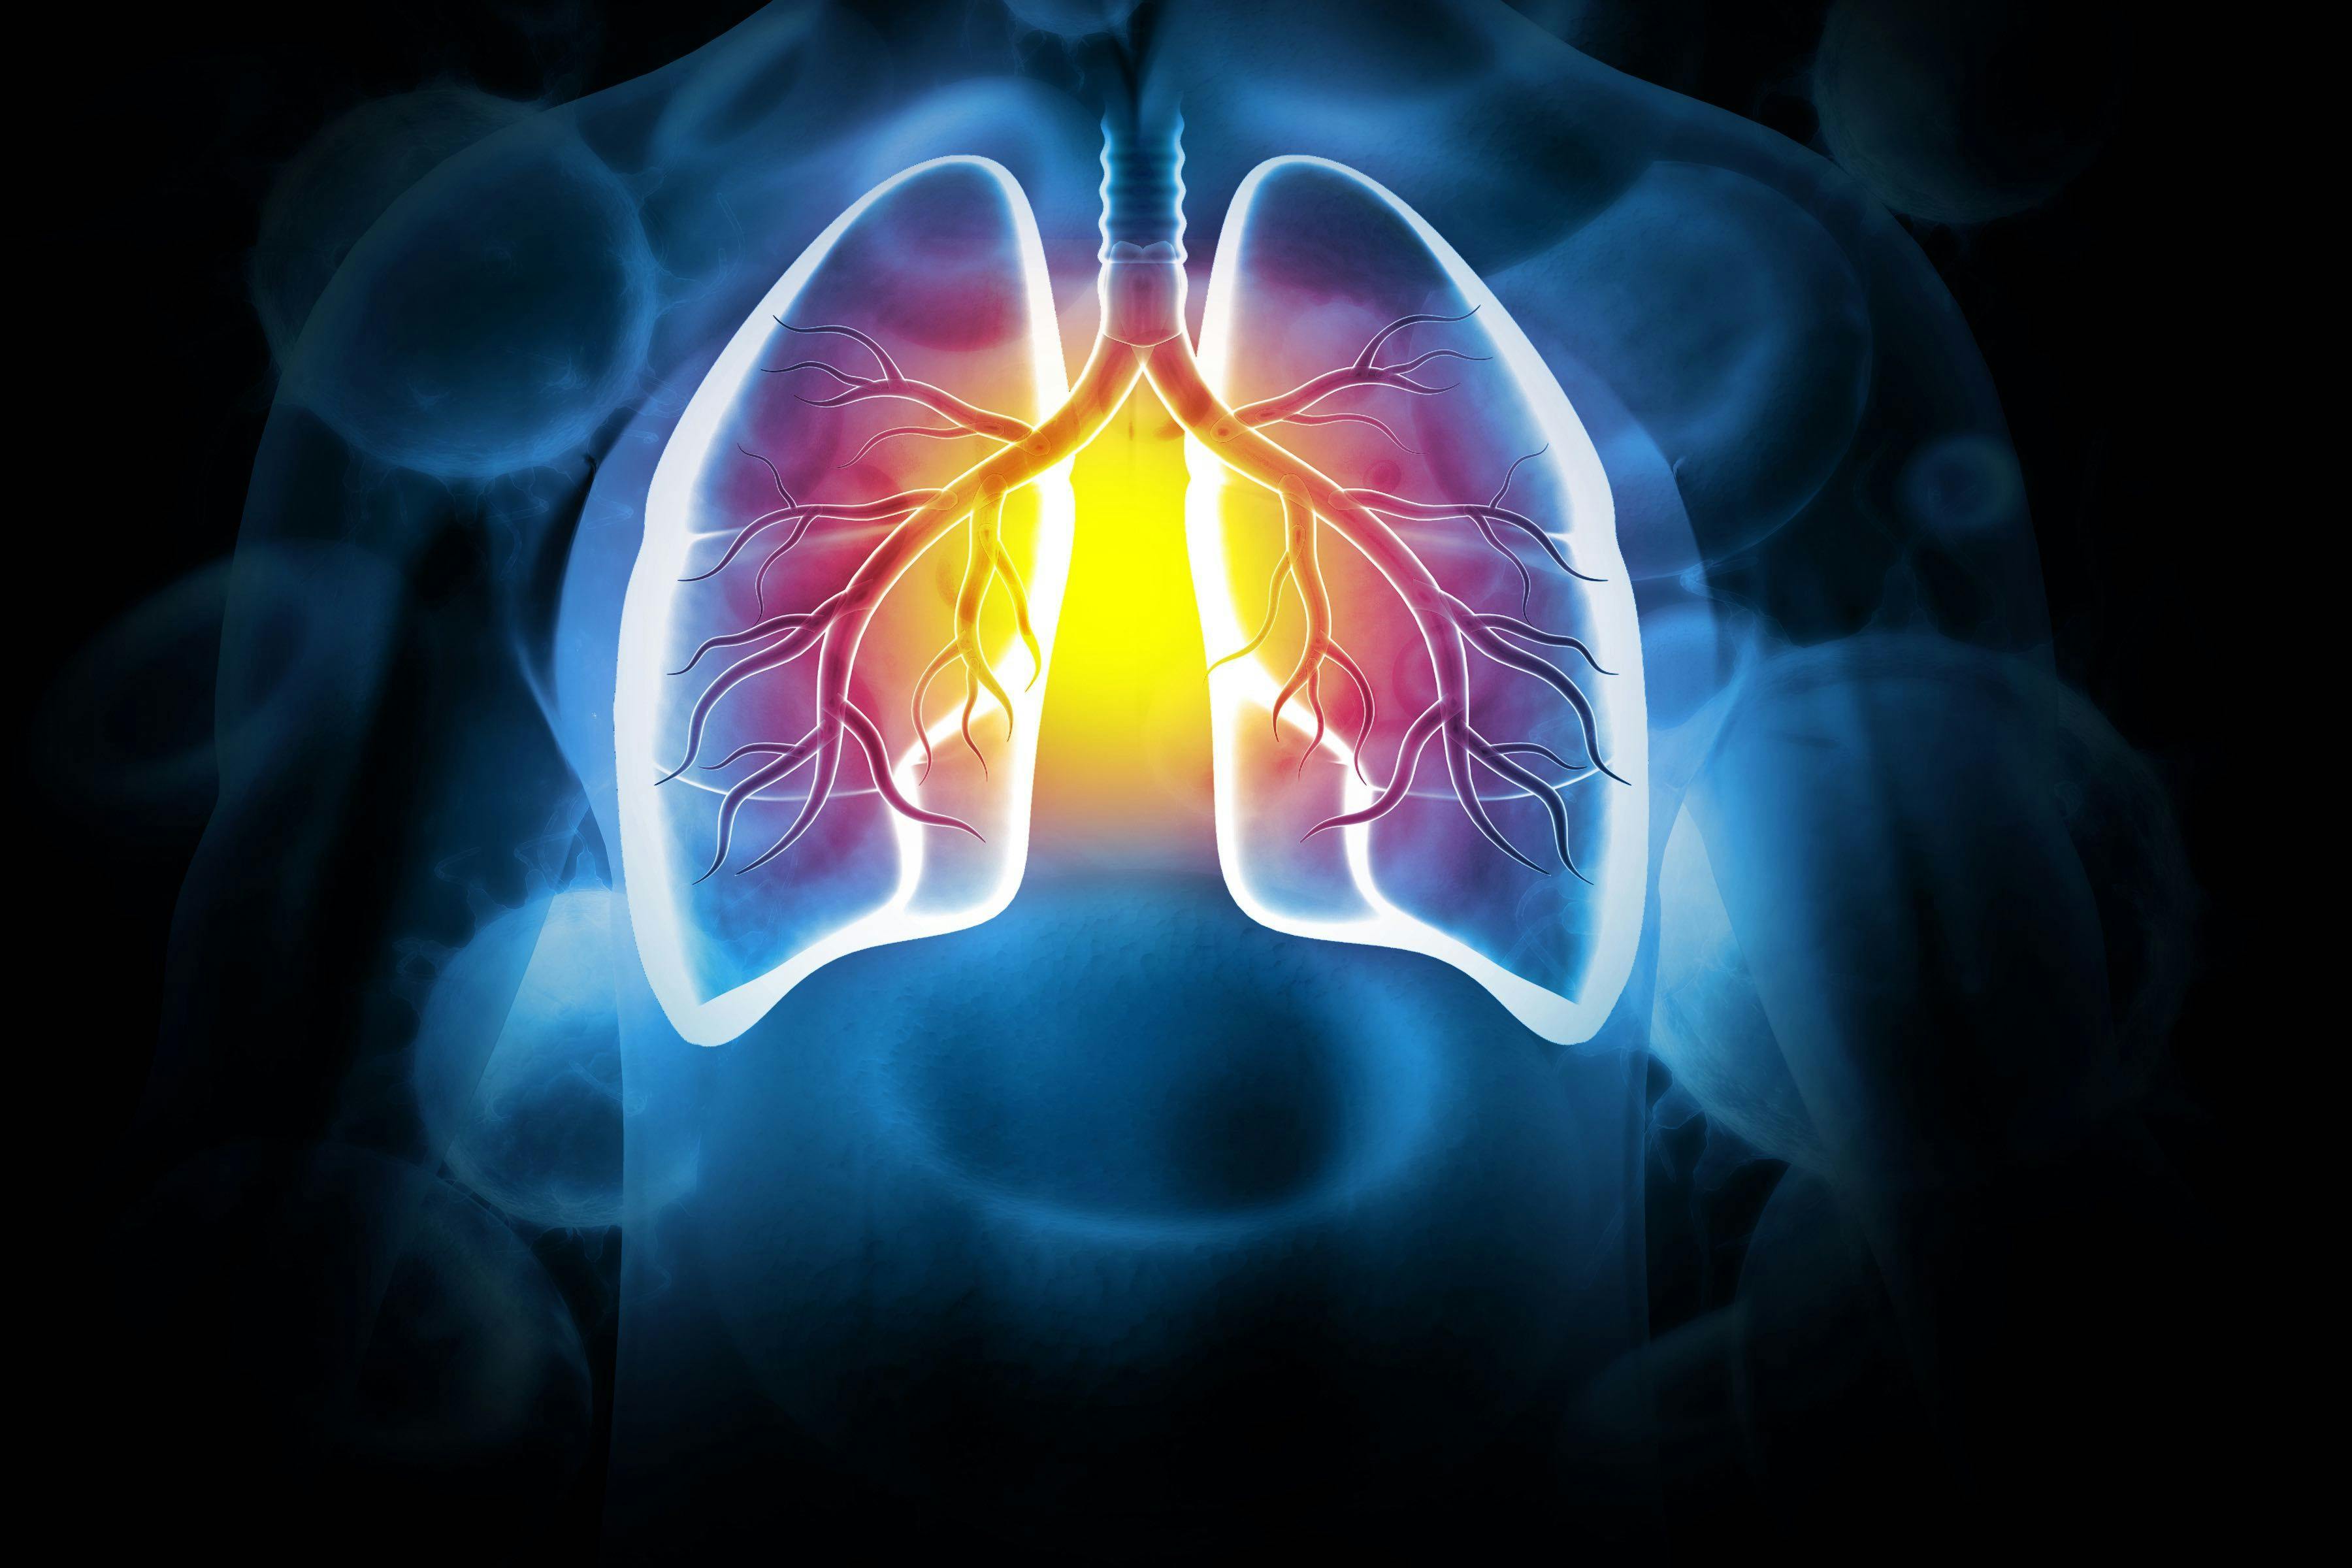 Lung disease | Image credit: Crystal light - stock.adobe.com